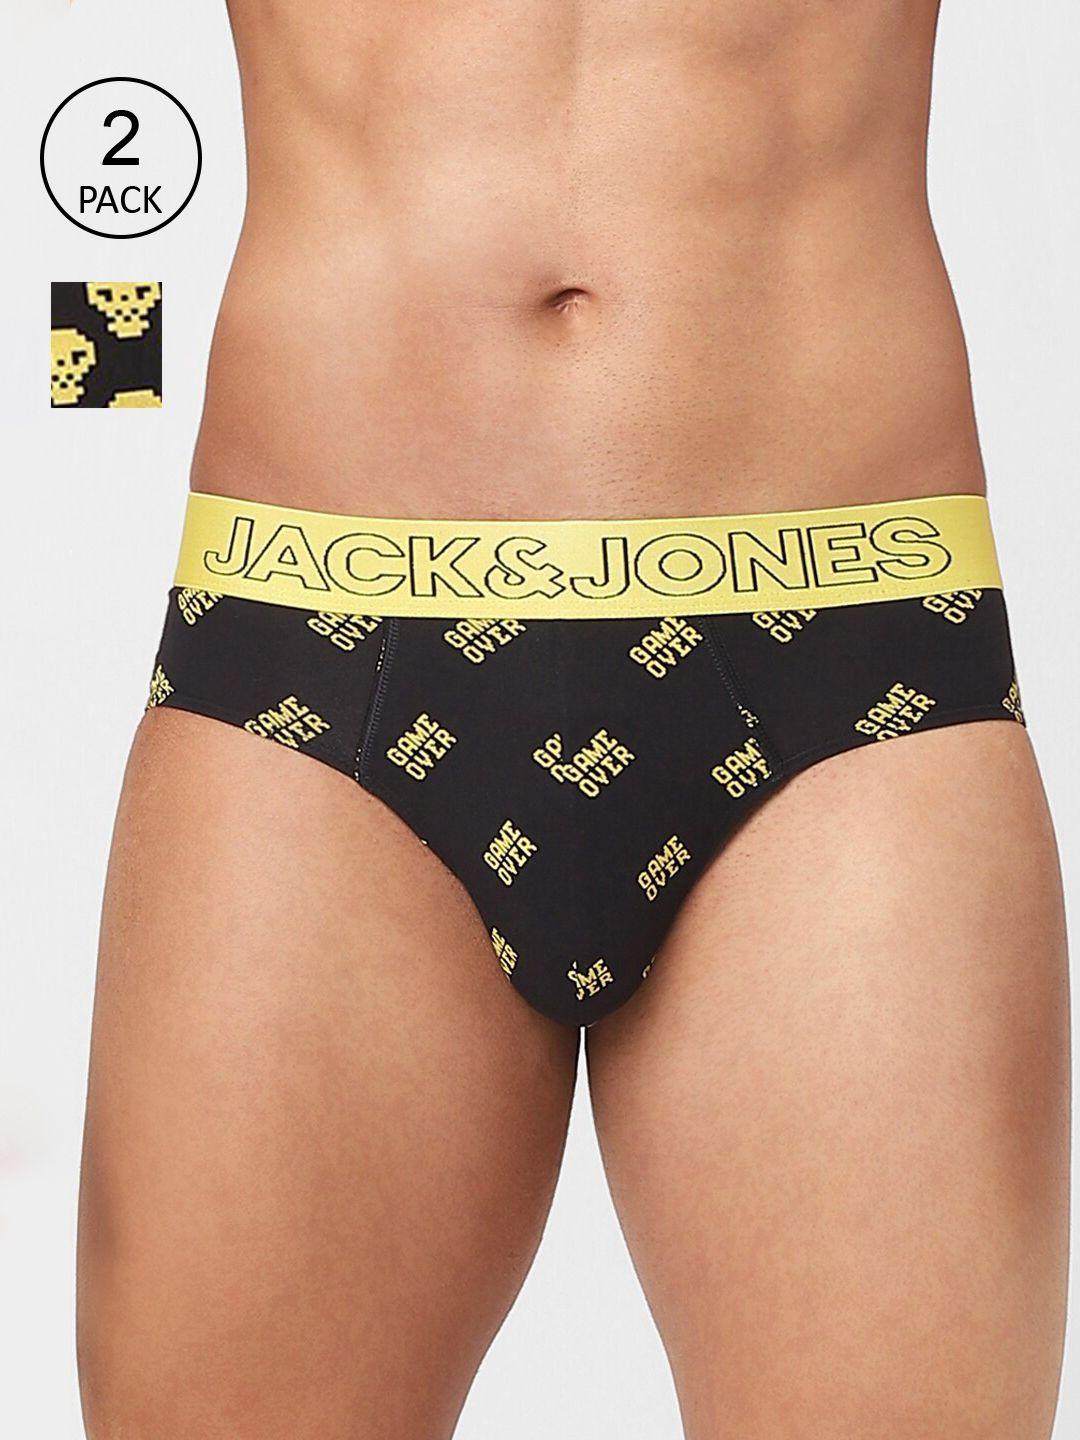 jack & jones men black & yellow pack of 2 printed cotton basic briefs